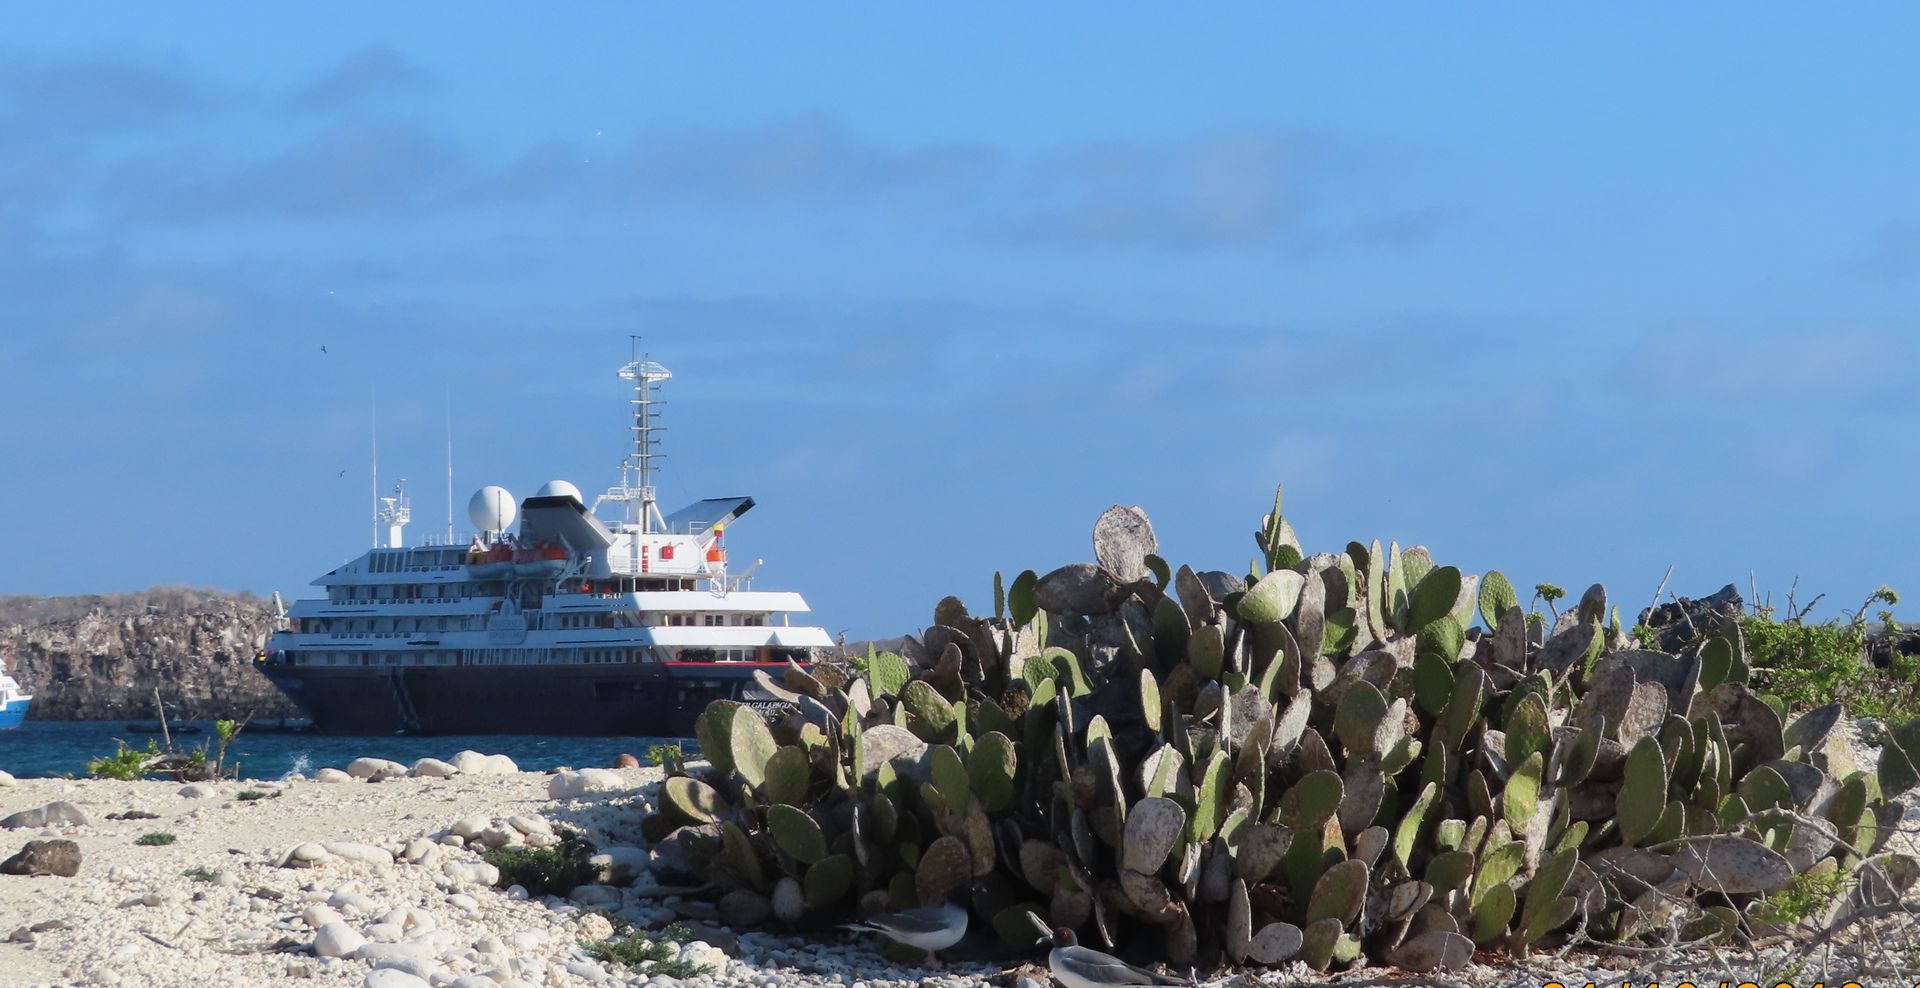 Silversea Galapagos ships moored off a beach